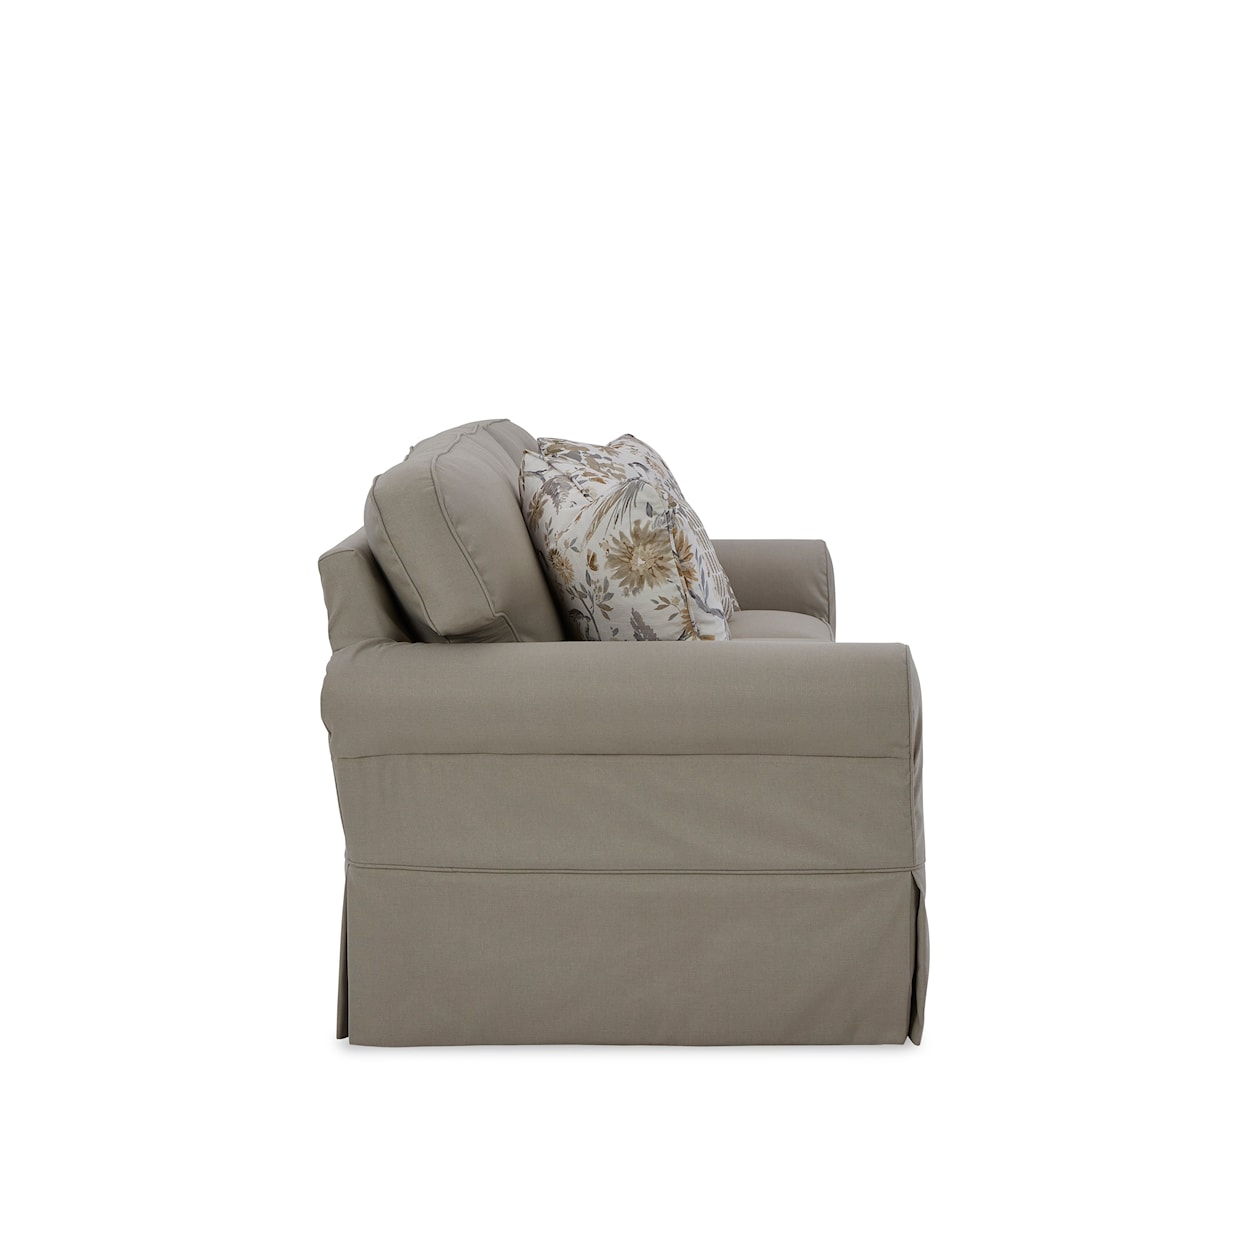 Craftmaster Alyssa Memory Foam Queen Sleeper Sofa (3-Seat)